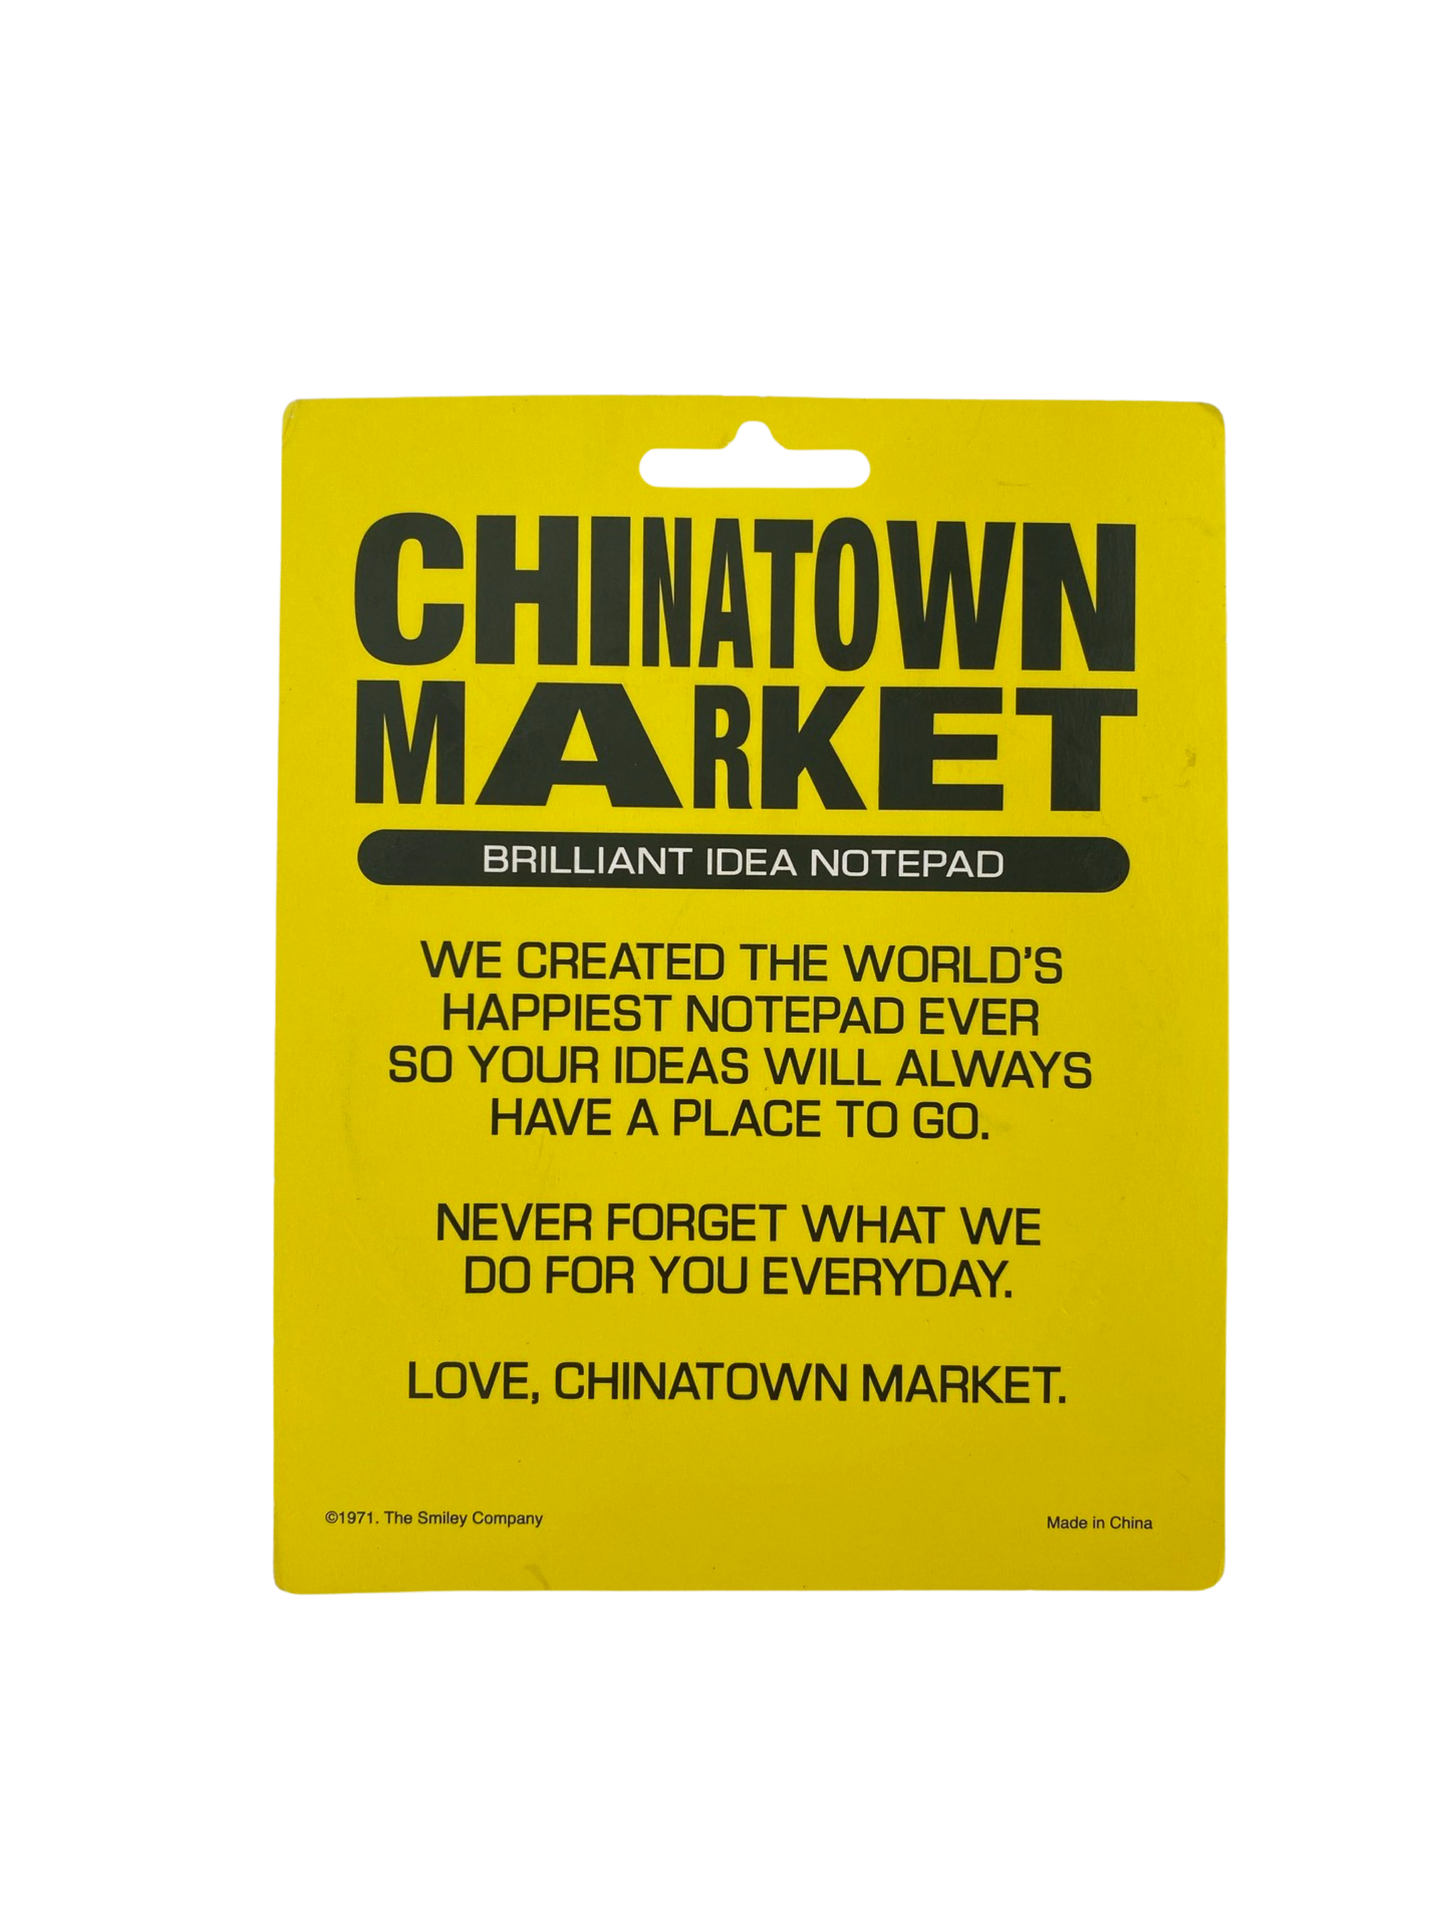 Chinatown Market Fun "Brilliant Idea Notepad" -smiley